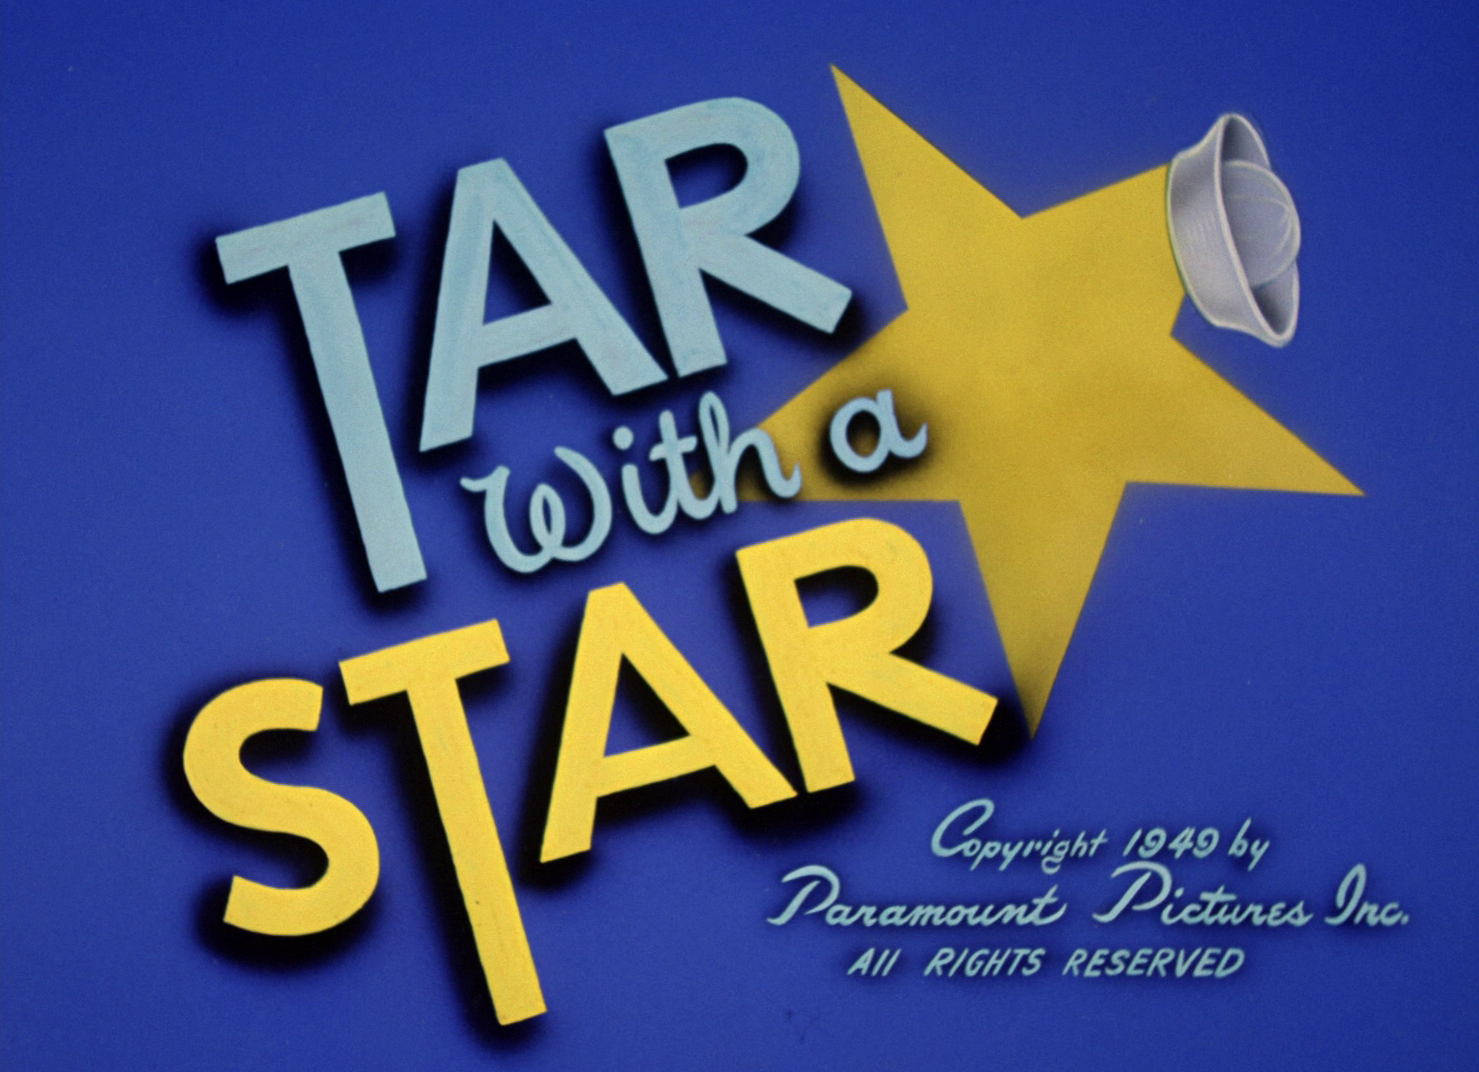 Tar with a Star | Popeye the Sailorpedia | FANDOM powered by Wikia